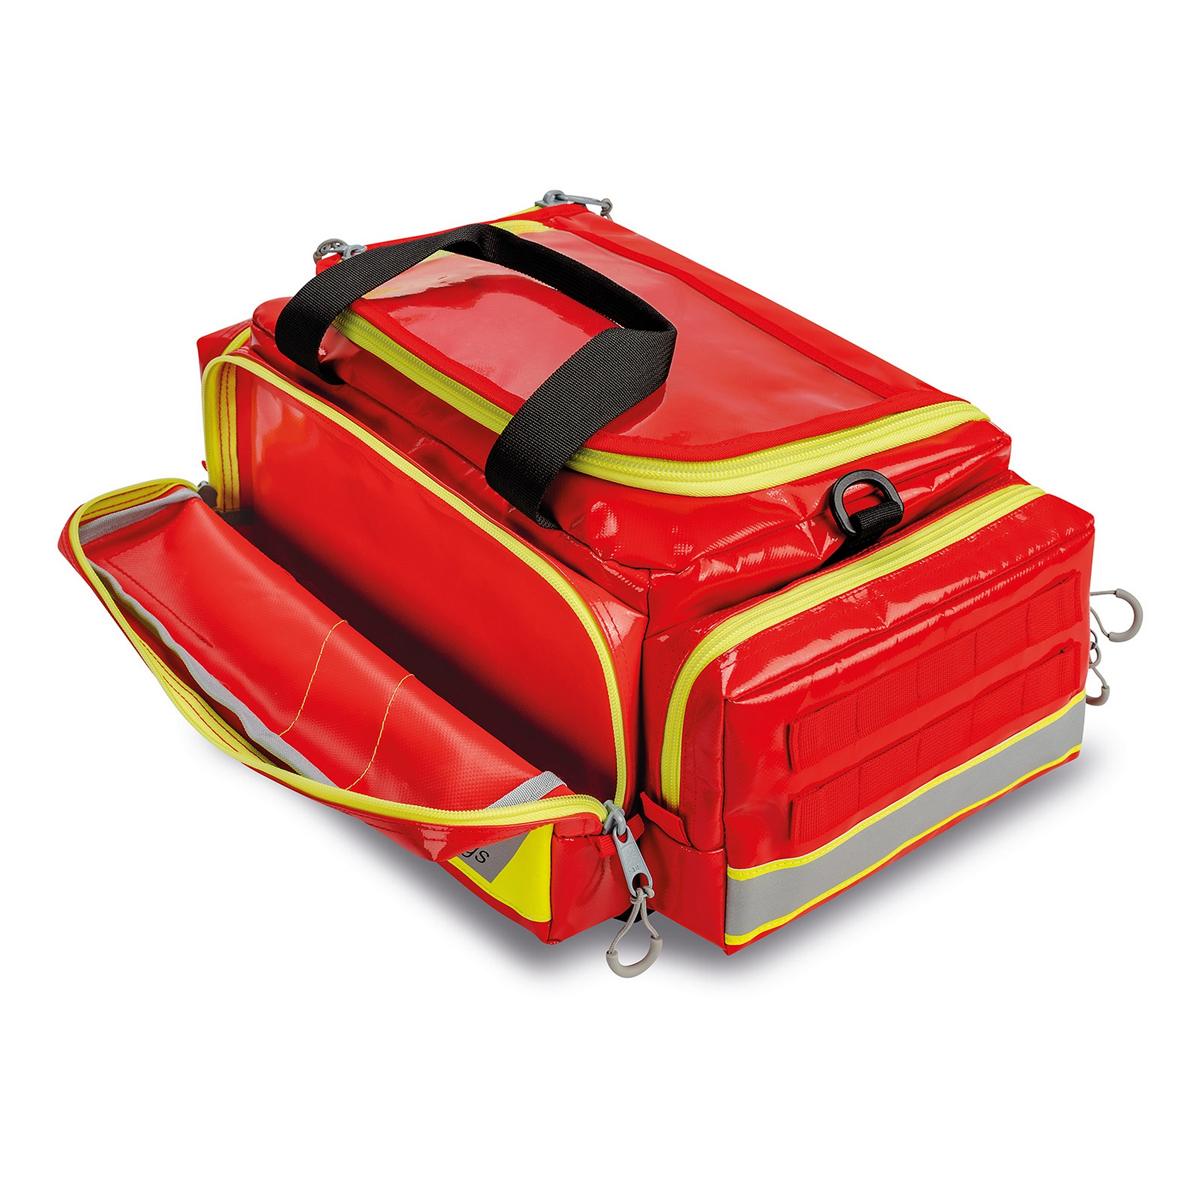 Lifebags Notfalltasche S - tagesleuchtgelb